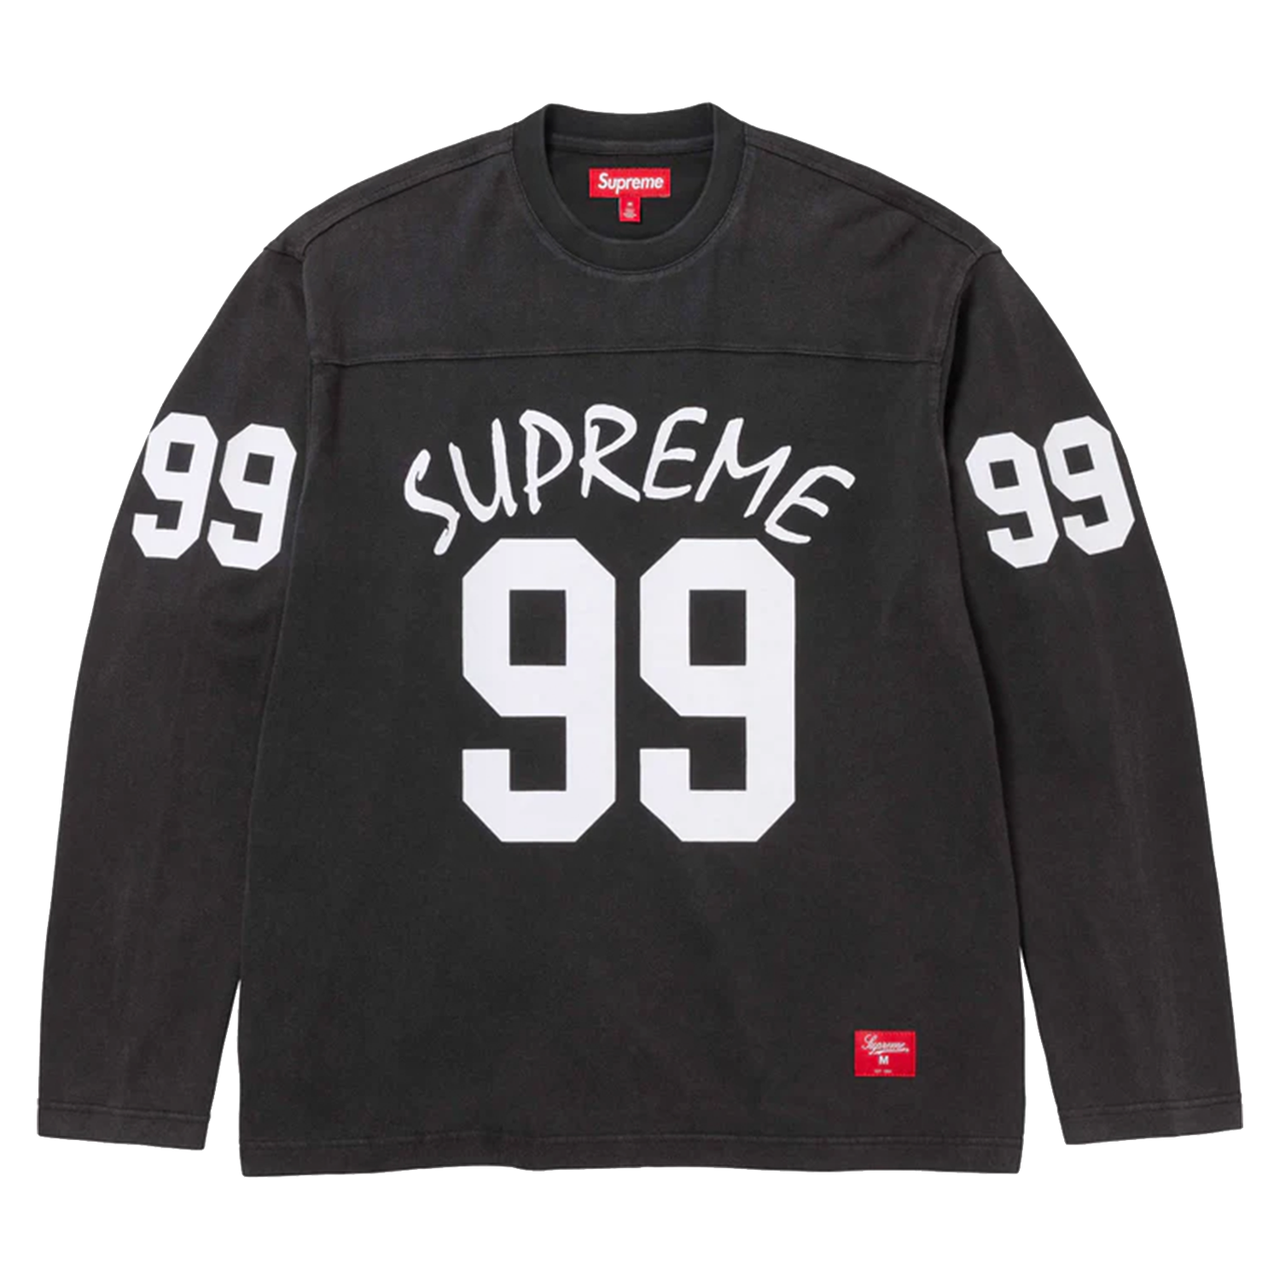 Supreme 99 Football Top Long Sleeve Black